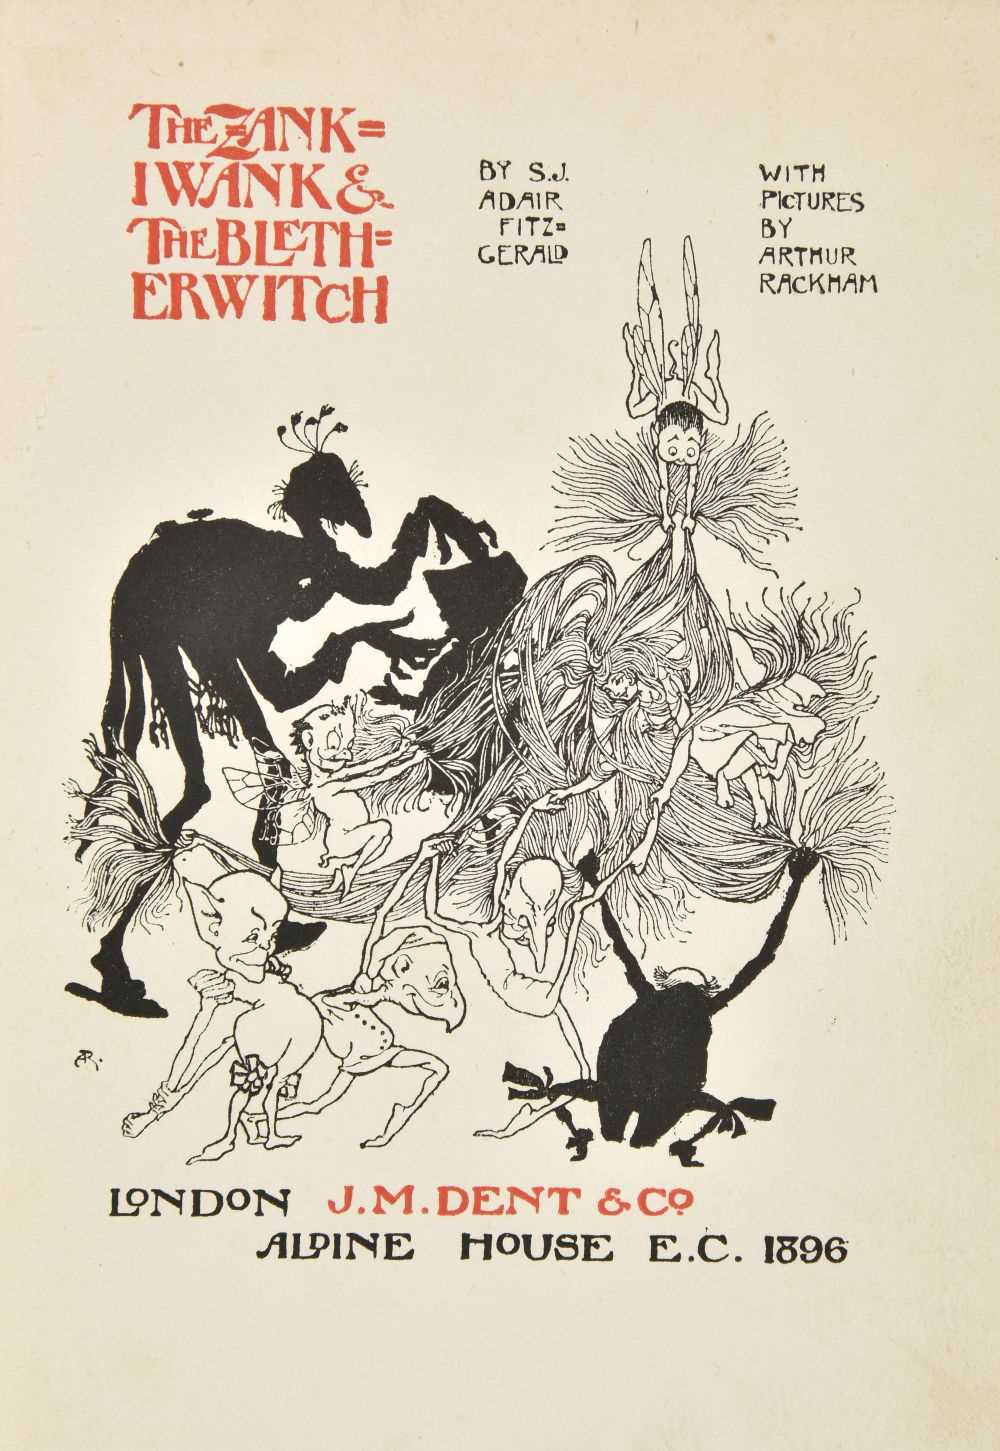 Lot 596 - Rackham (Arthur, illustrator). The Zankiwank & the Bletherwitch, 1896